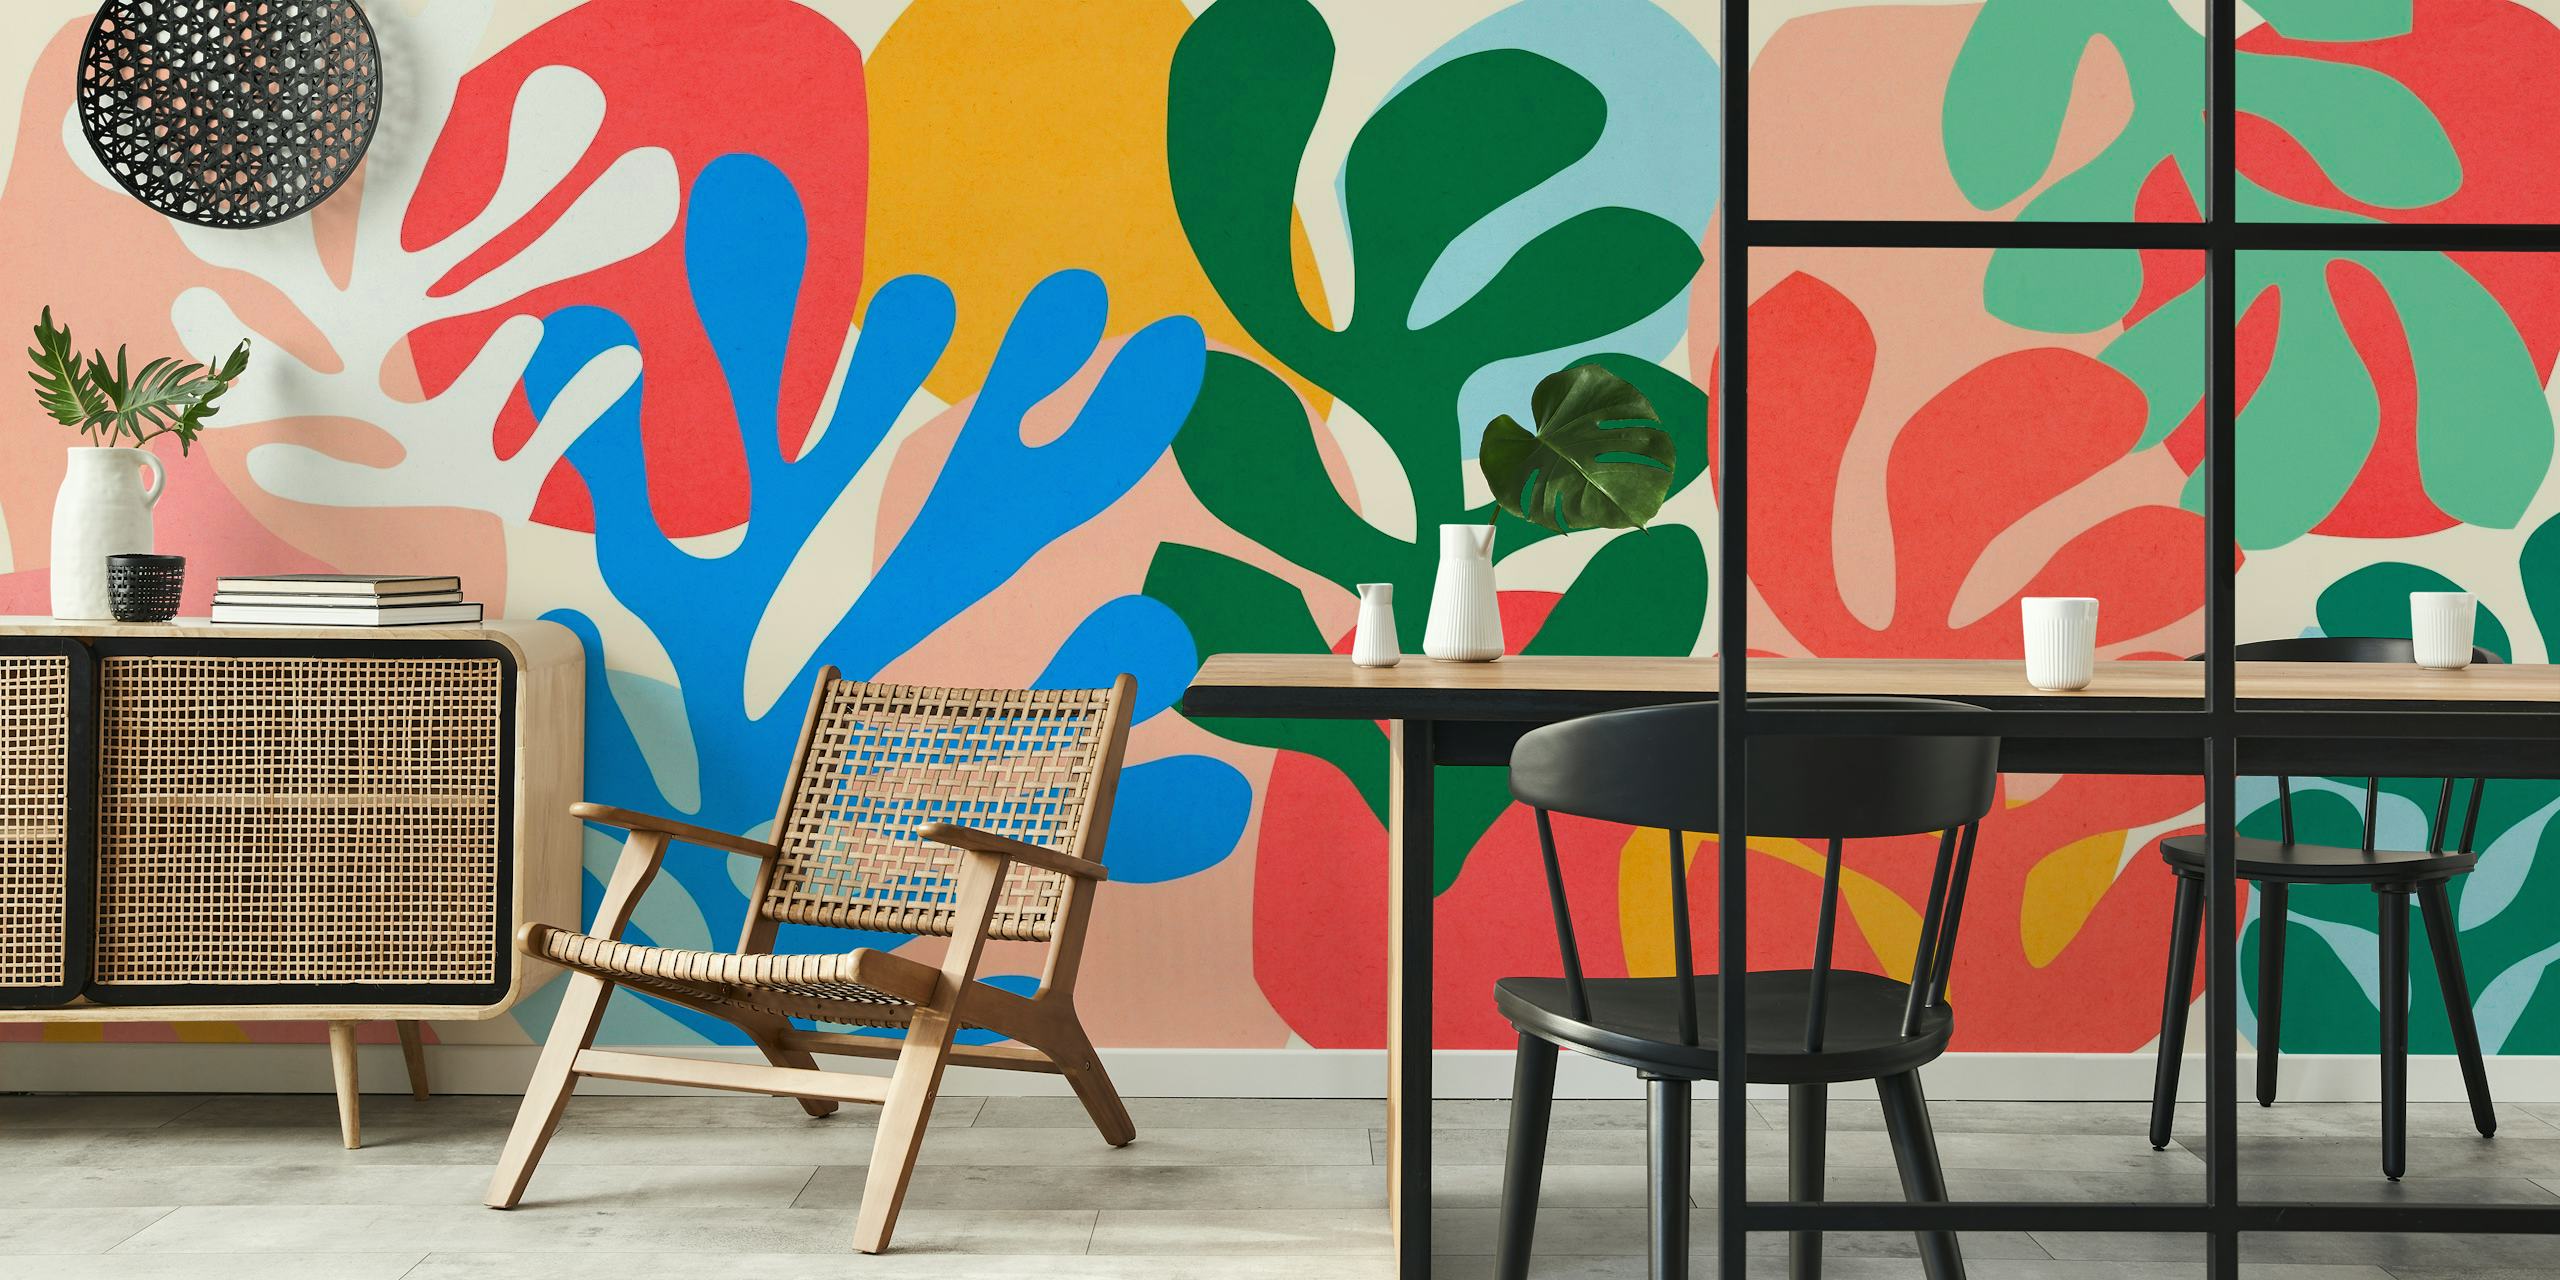 Abstraktes botanisches Wandbild mit lebendigem Matisse-inspiriertem Ausschnittdesign